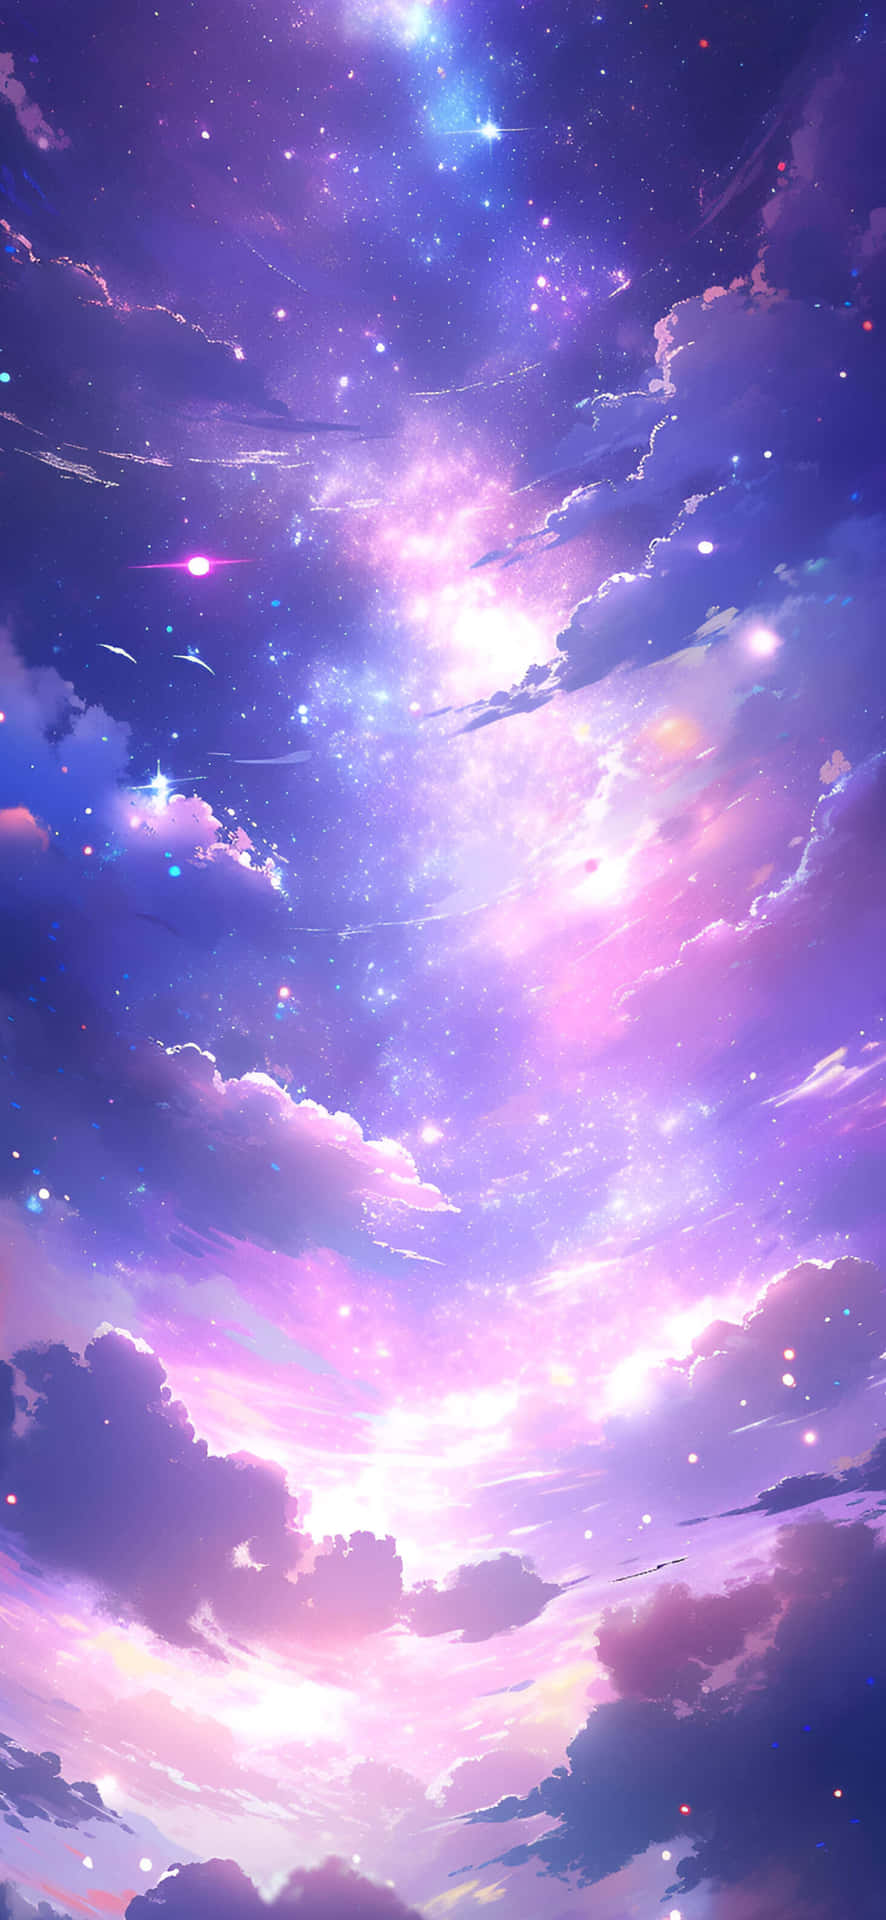 Starry Purple Sky Dreamscape Wallpaper